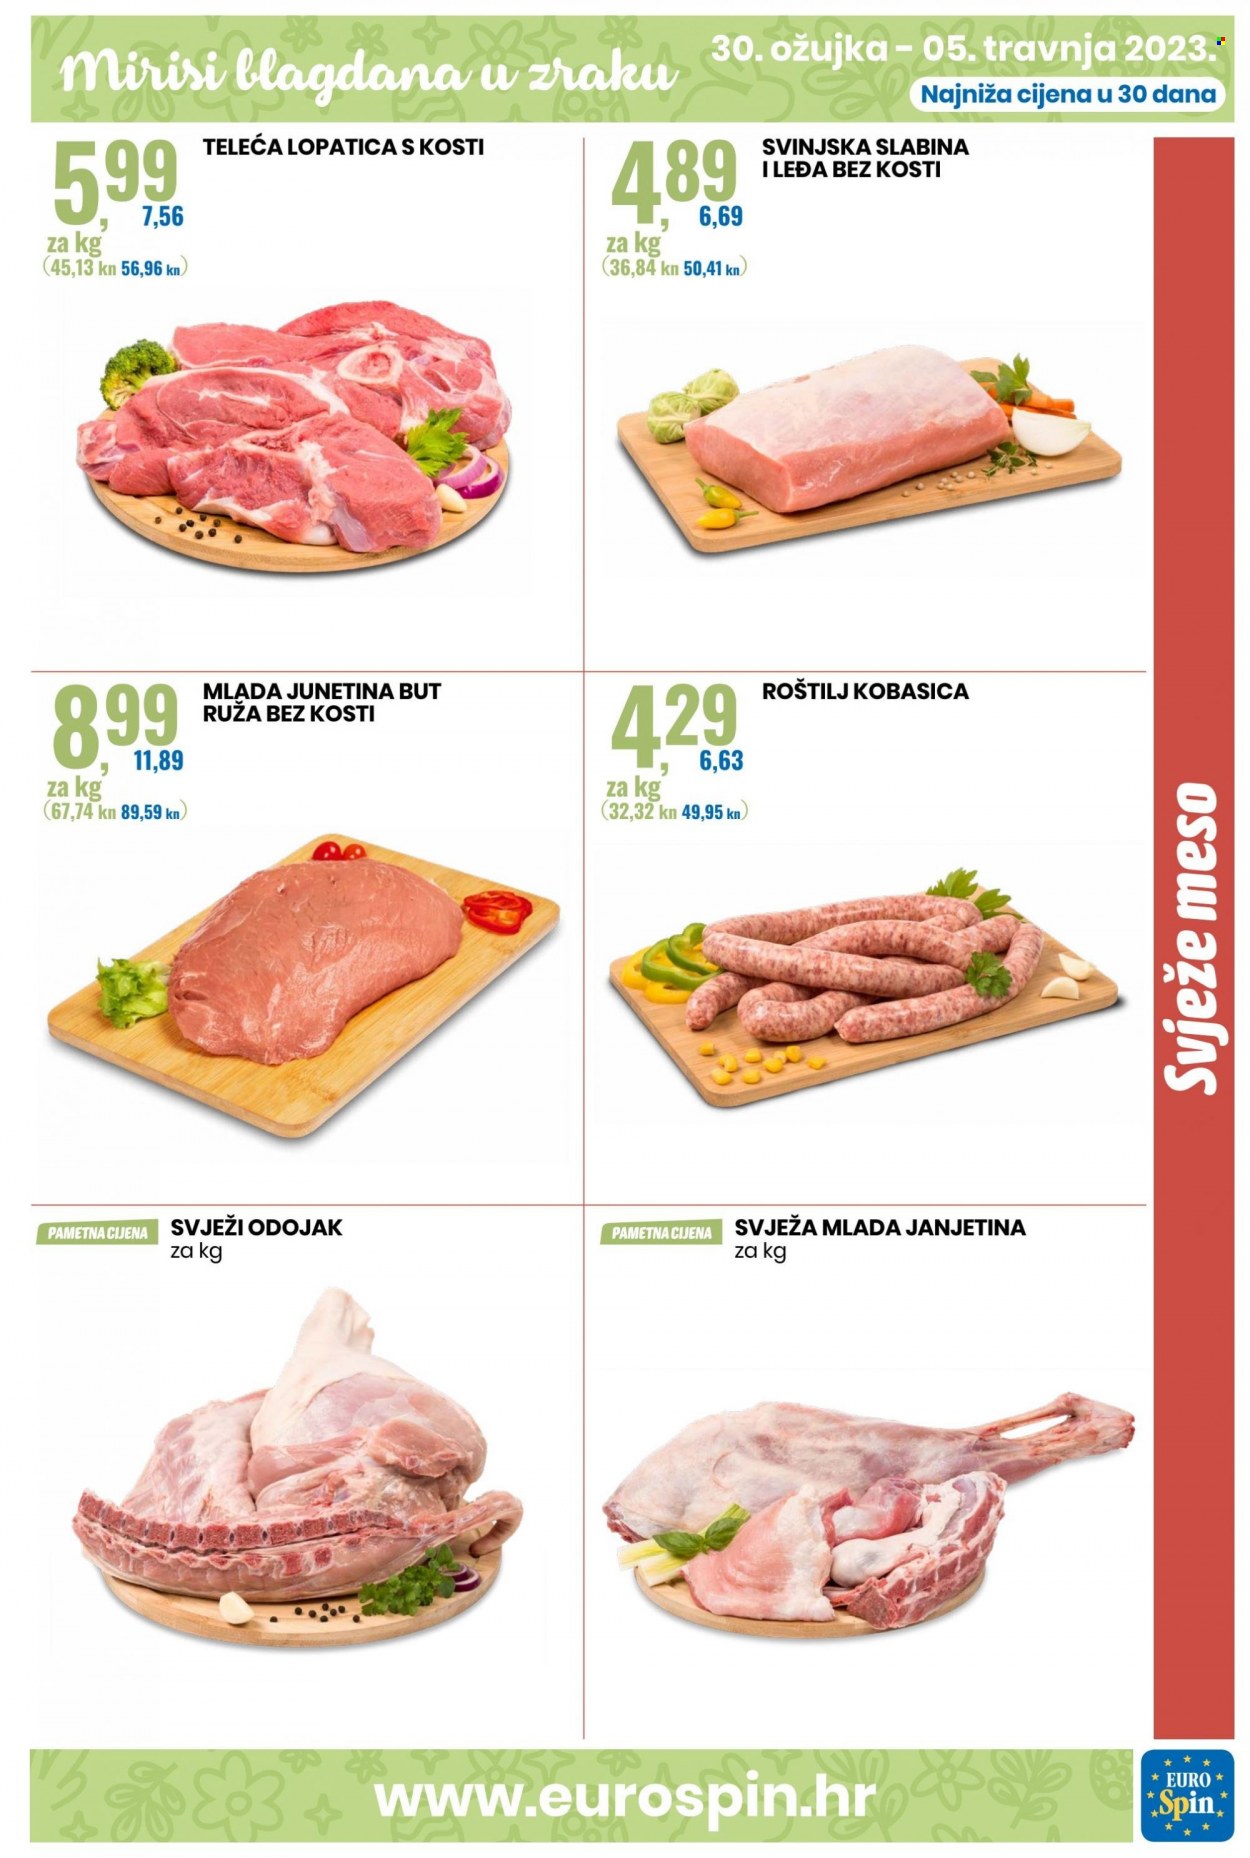 thumbnail - Eurospin katalog - 30.03.2023. - 05.04.2023. - Sniženi proizvodi - junetina, svinjska slabina i leđa, svinjsko meso, teleća lopatica, teletina, kobasica, kobasica roštiljska. Stranica 3.